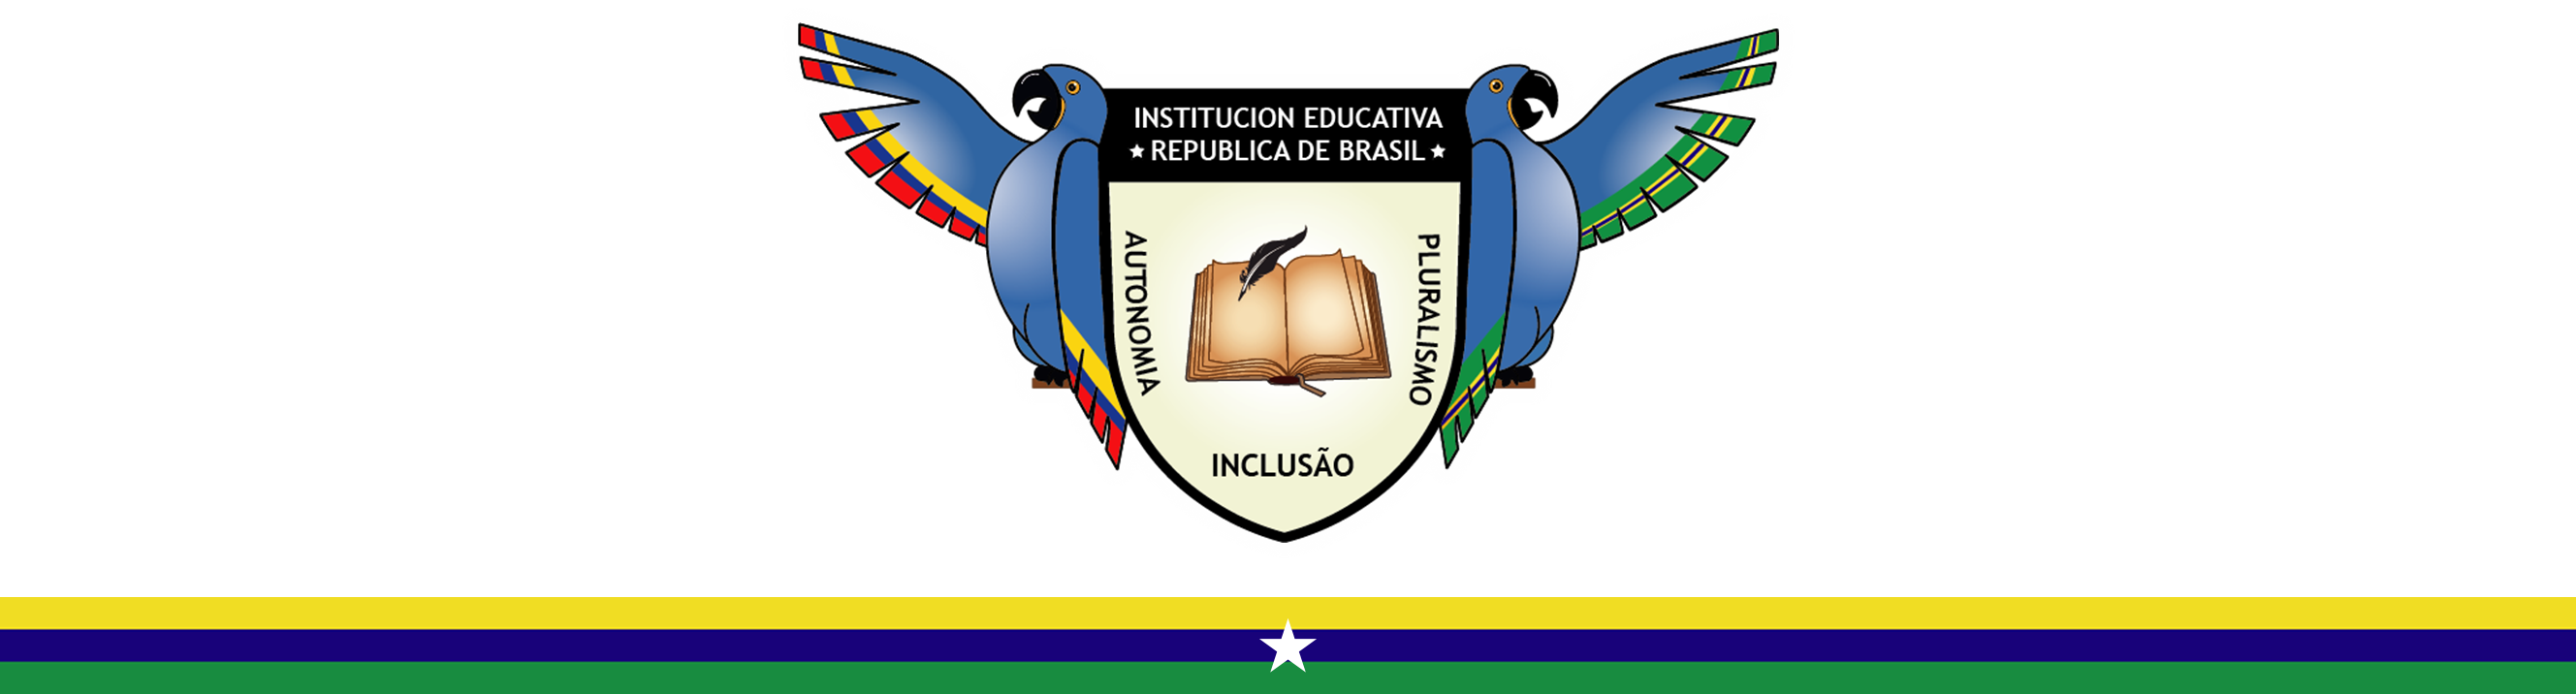 Imagen Institucional Institución Educativa República de Brasil.png